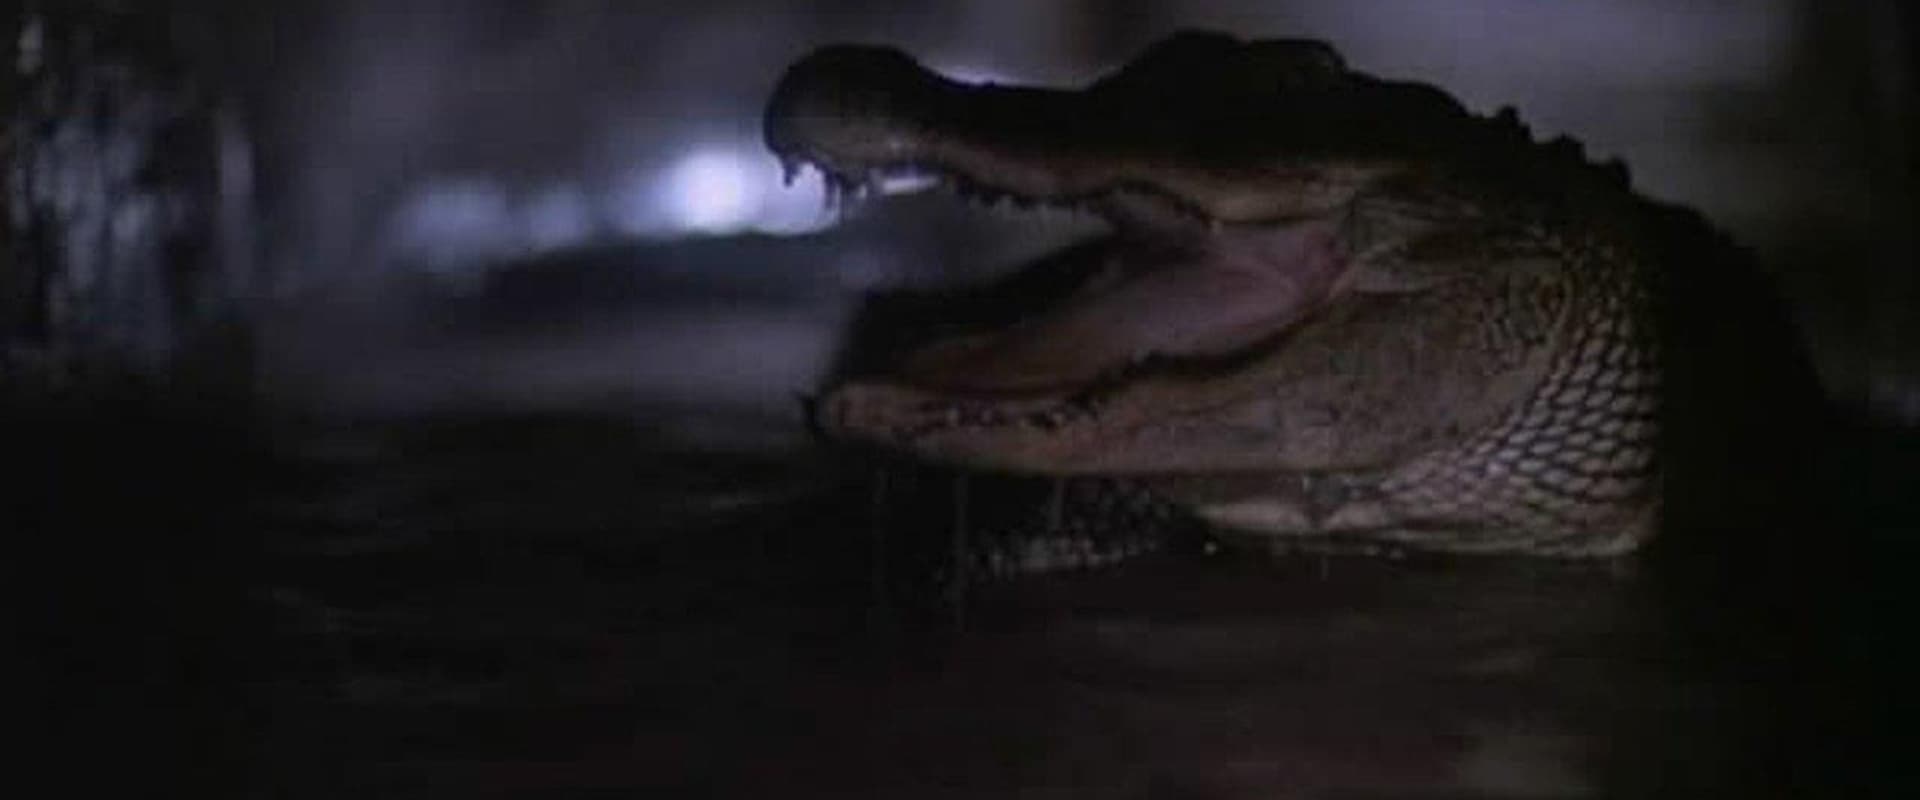 Alligator 2: The Mutation